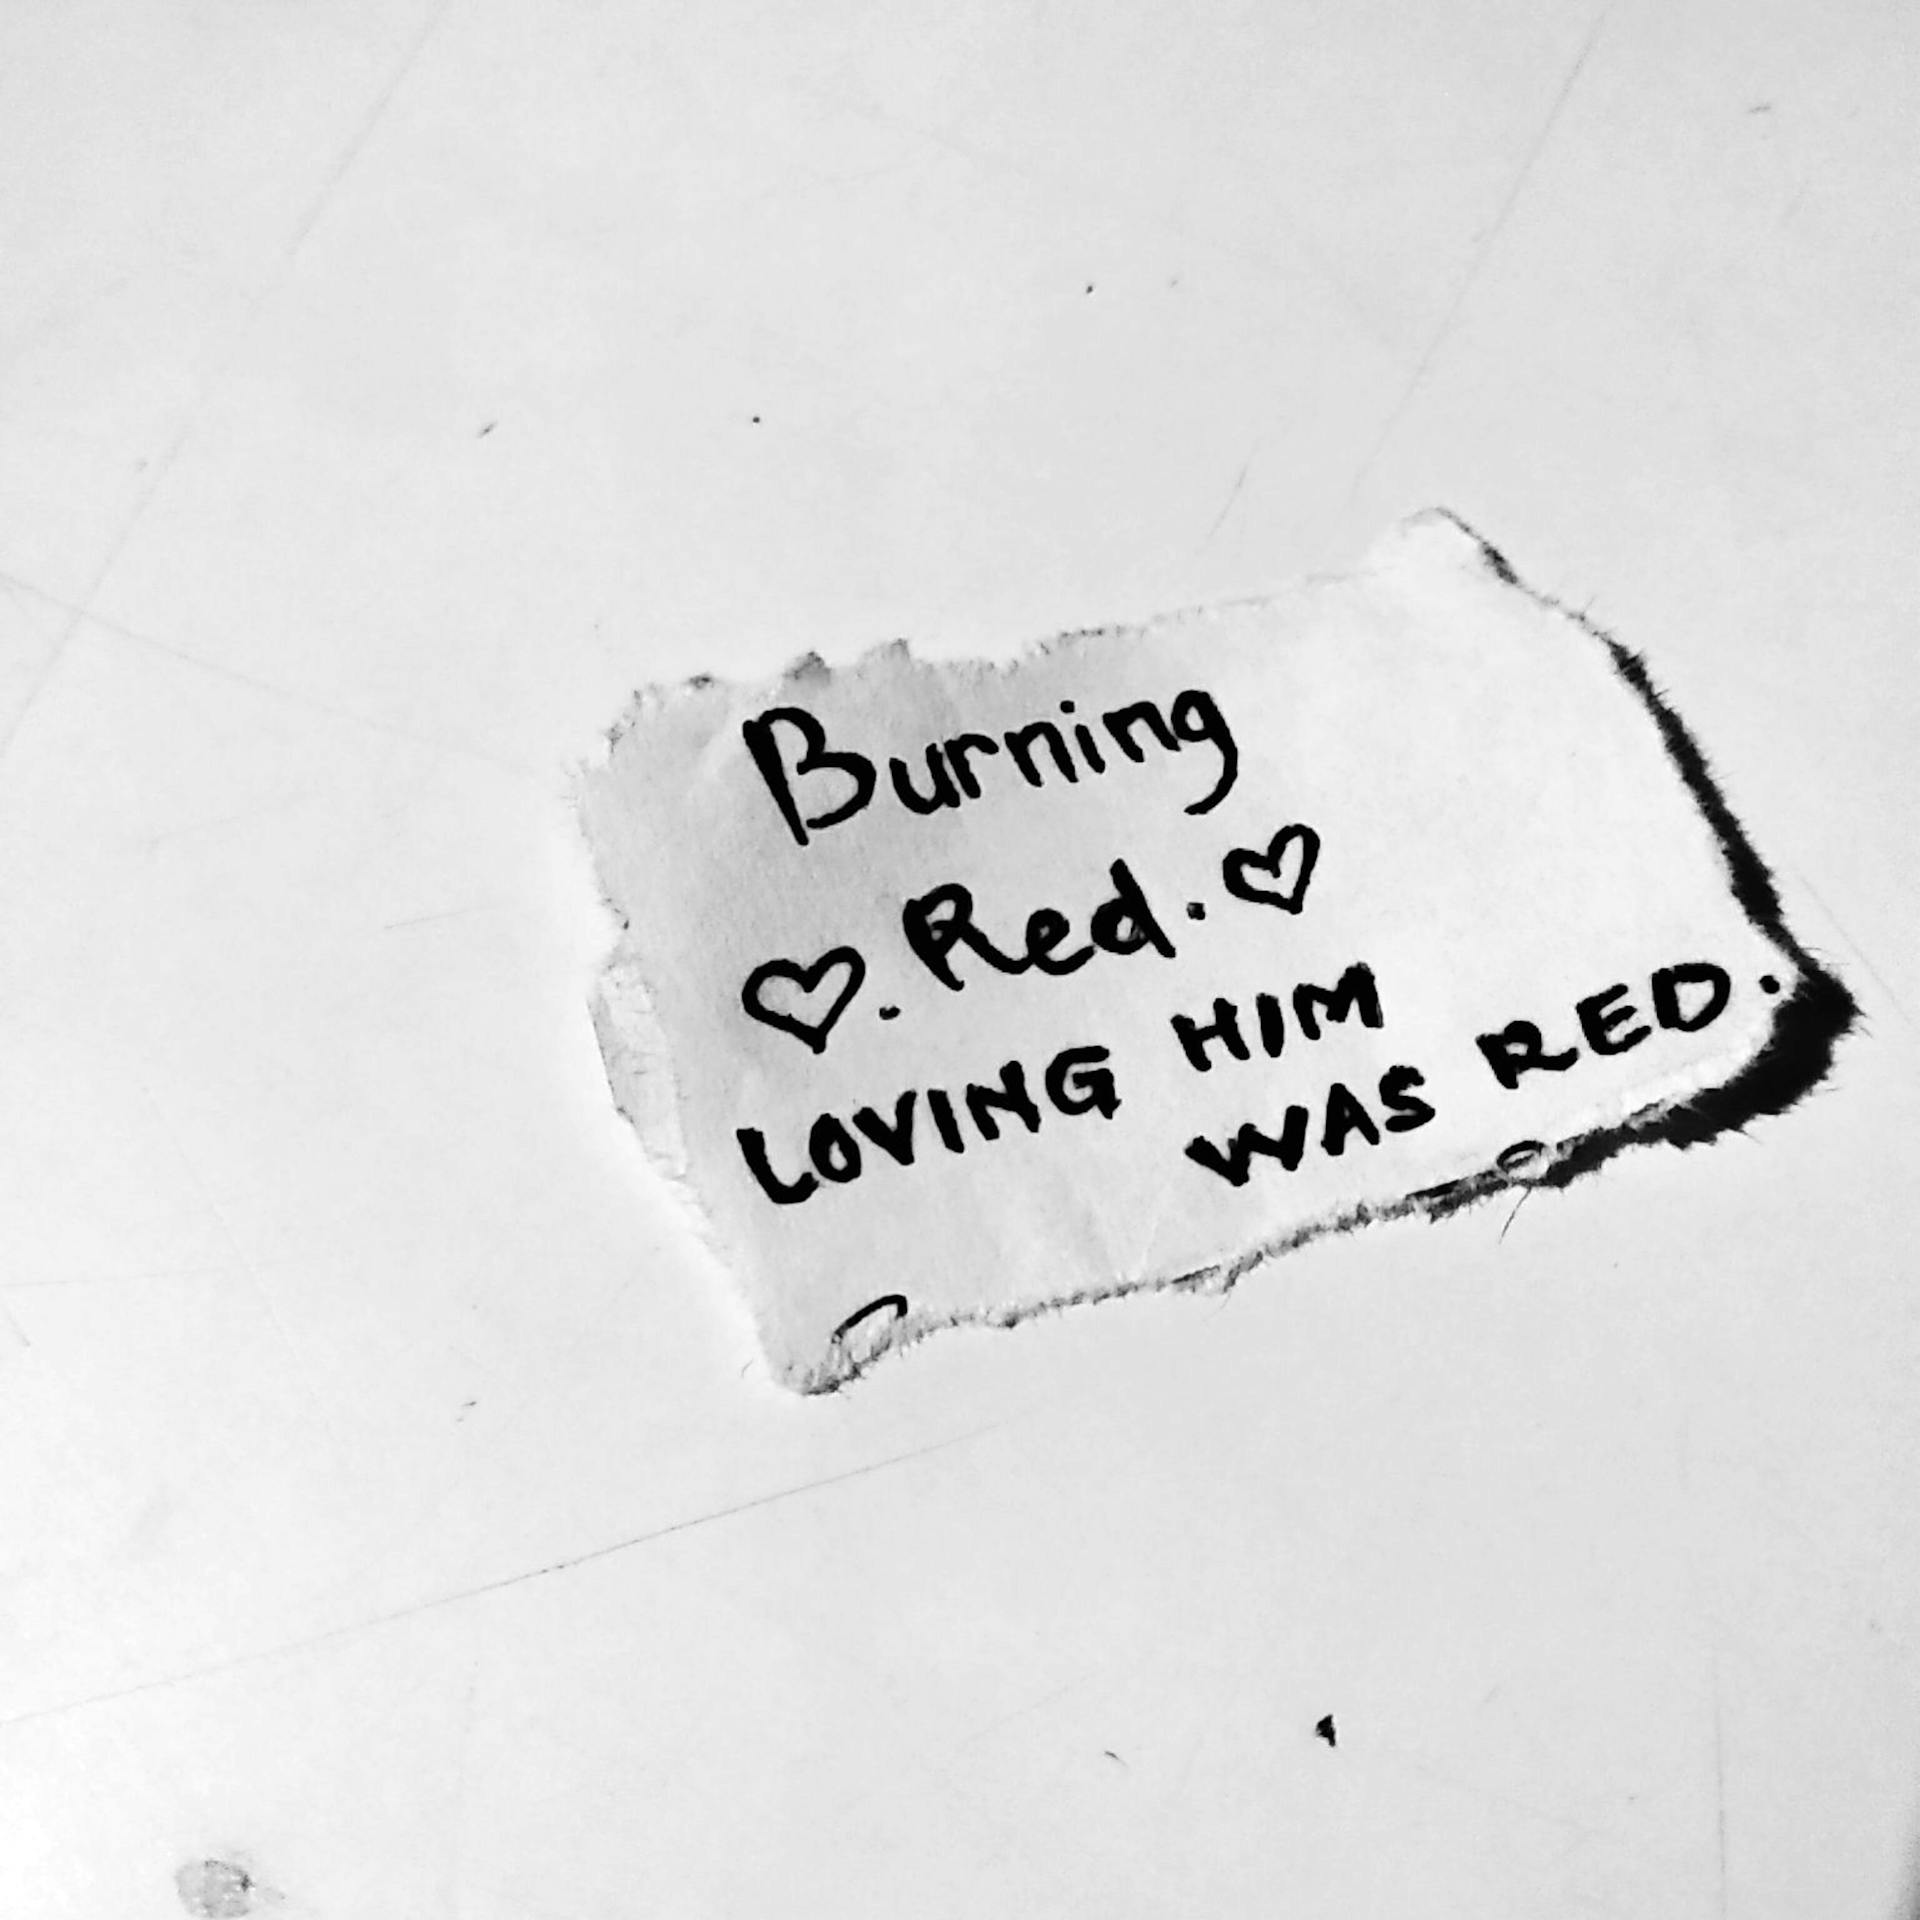 A handwritten message on a piece of paper | Source: Pexels